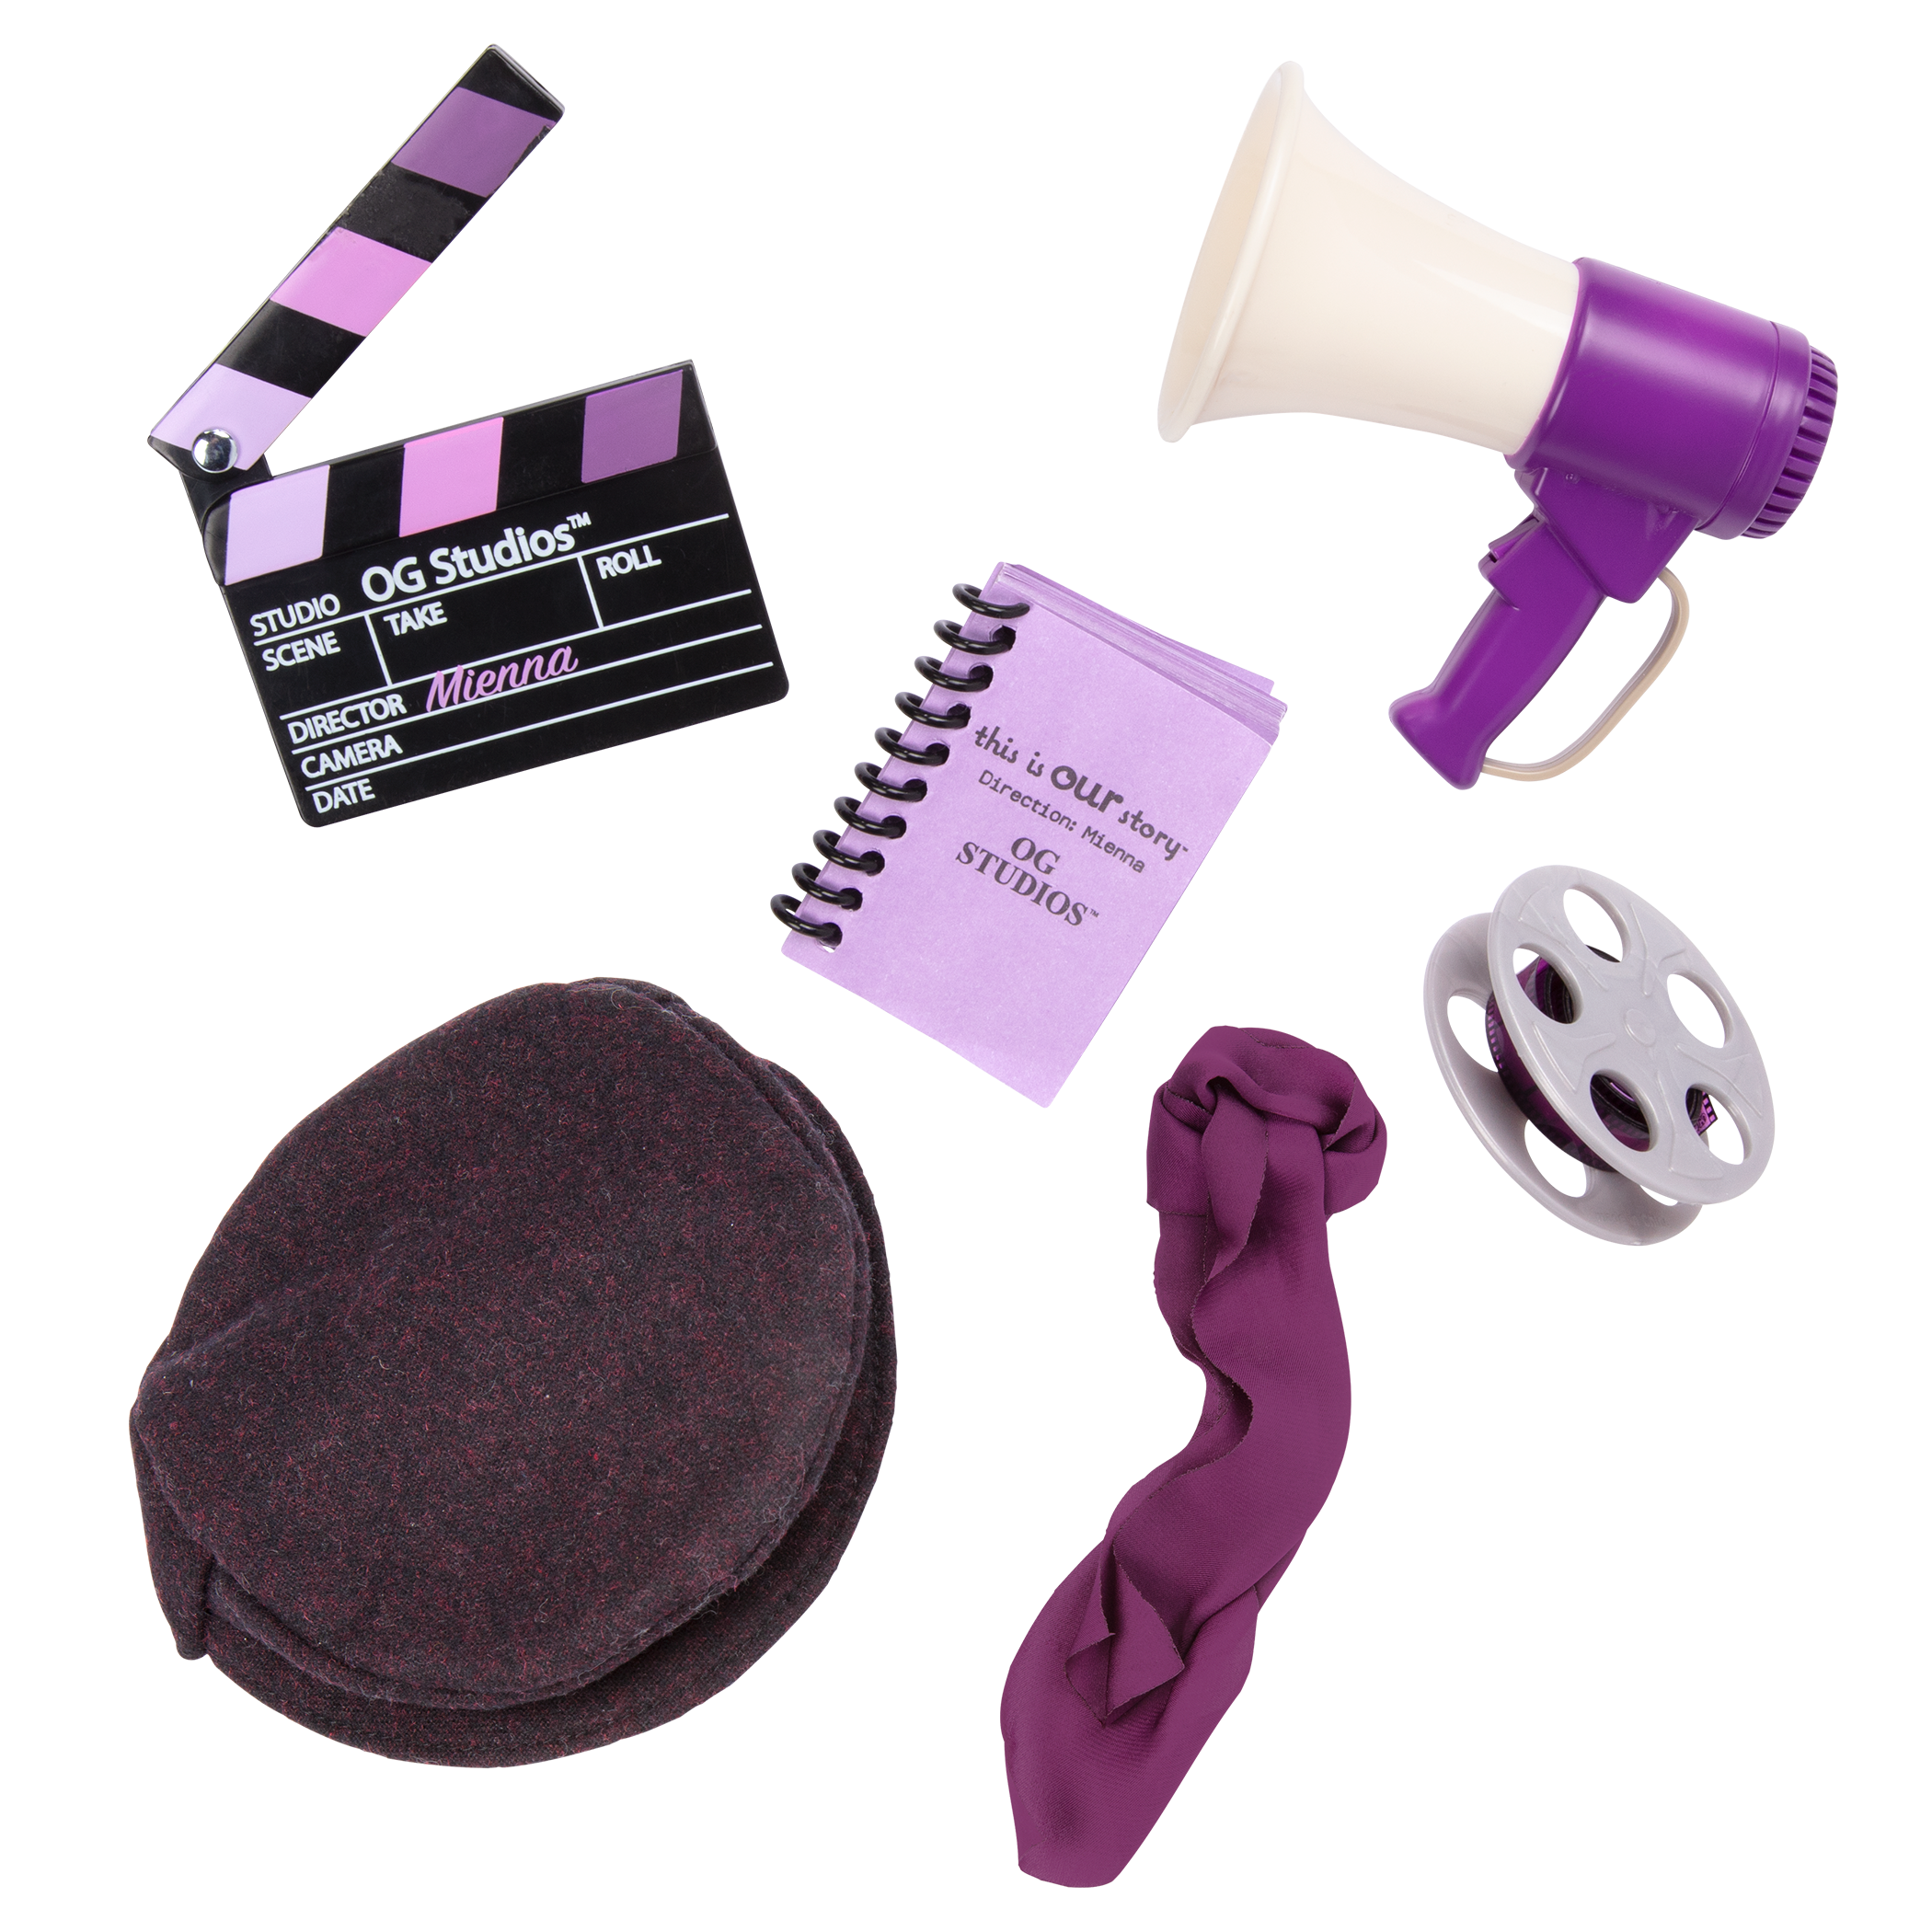 Detail of movie accessories